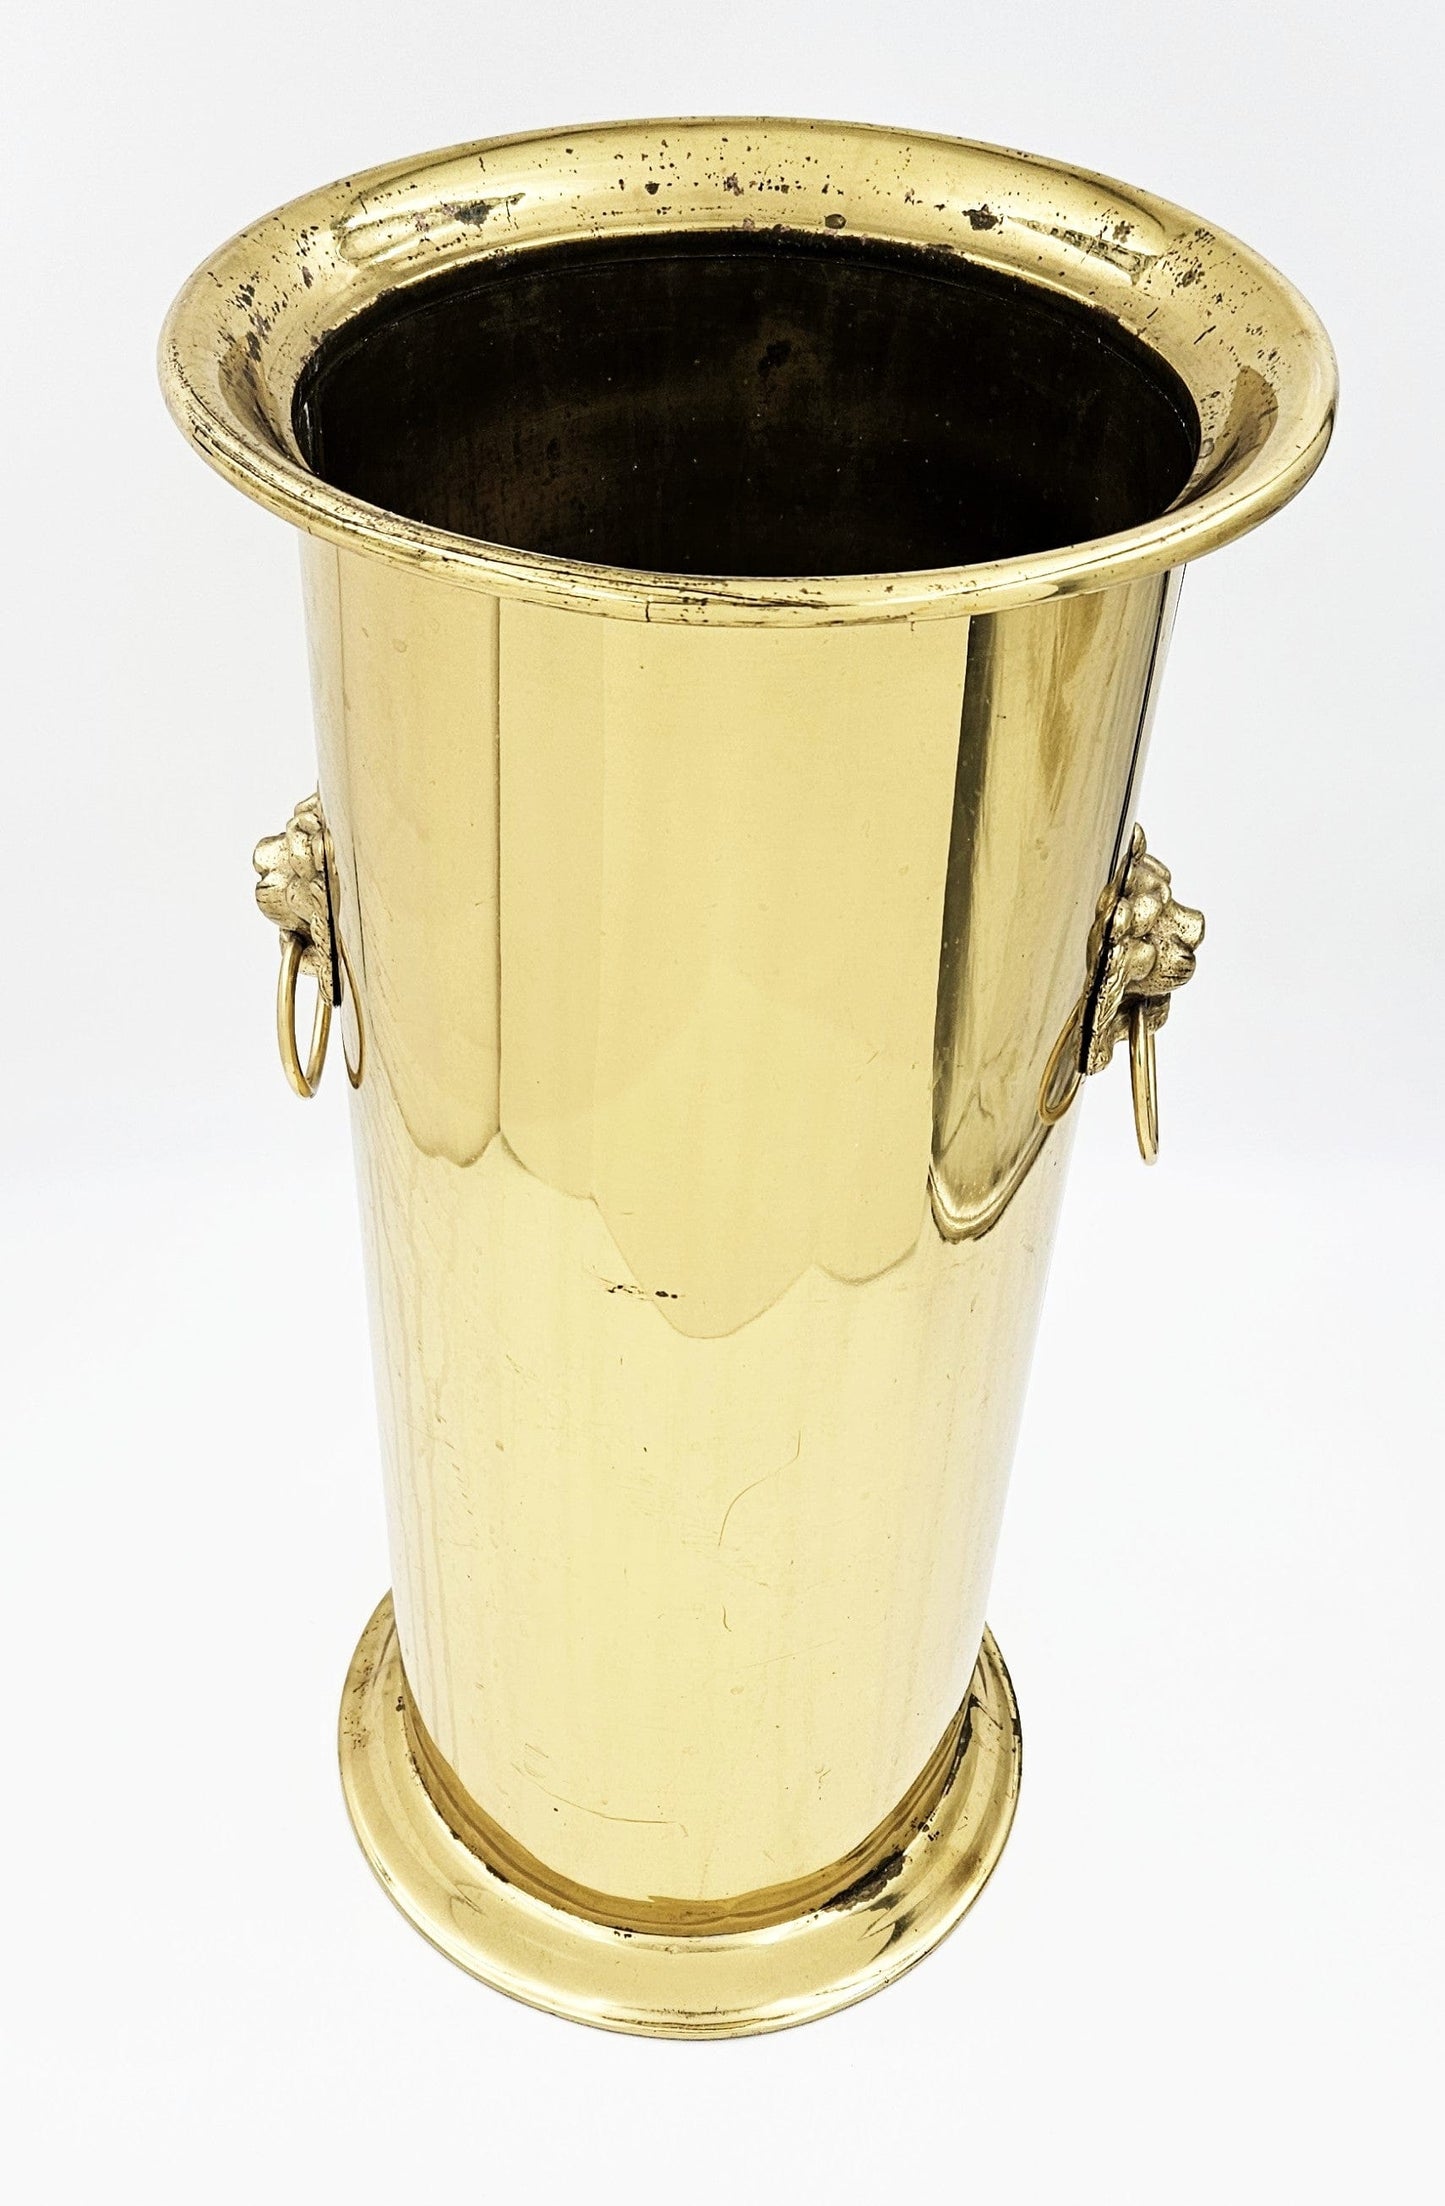 Antique Brass Umbrella Stand Home Decor Vintage Brass Lion Head Handles Tall Umbrella Stand or Planter Pot